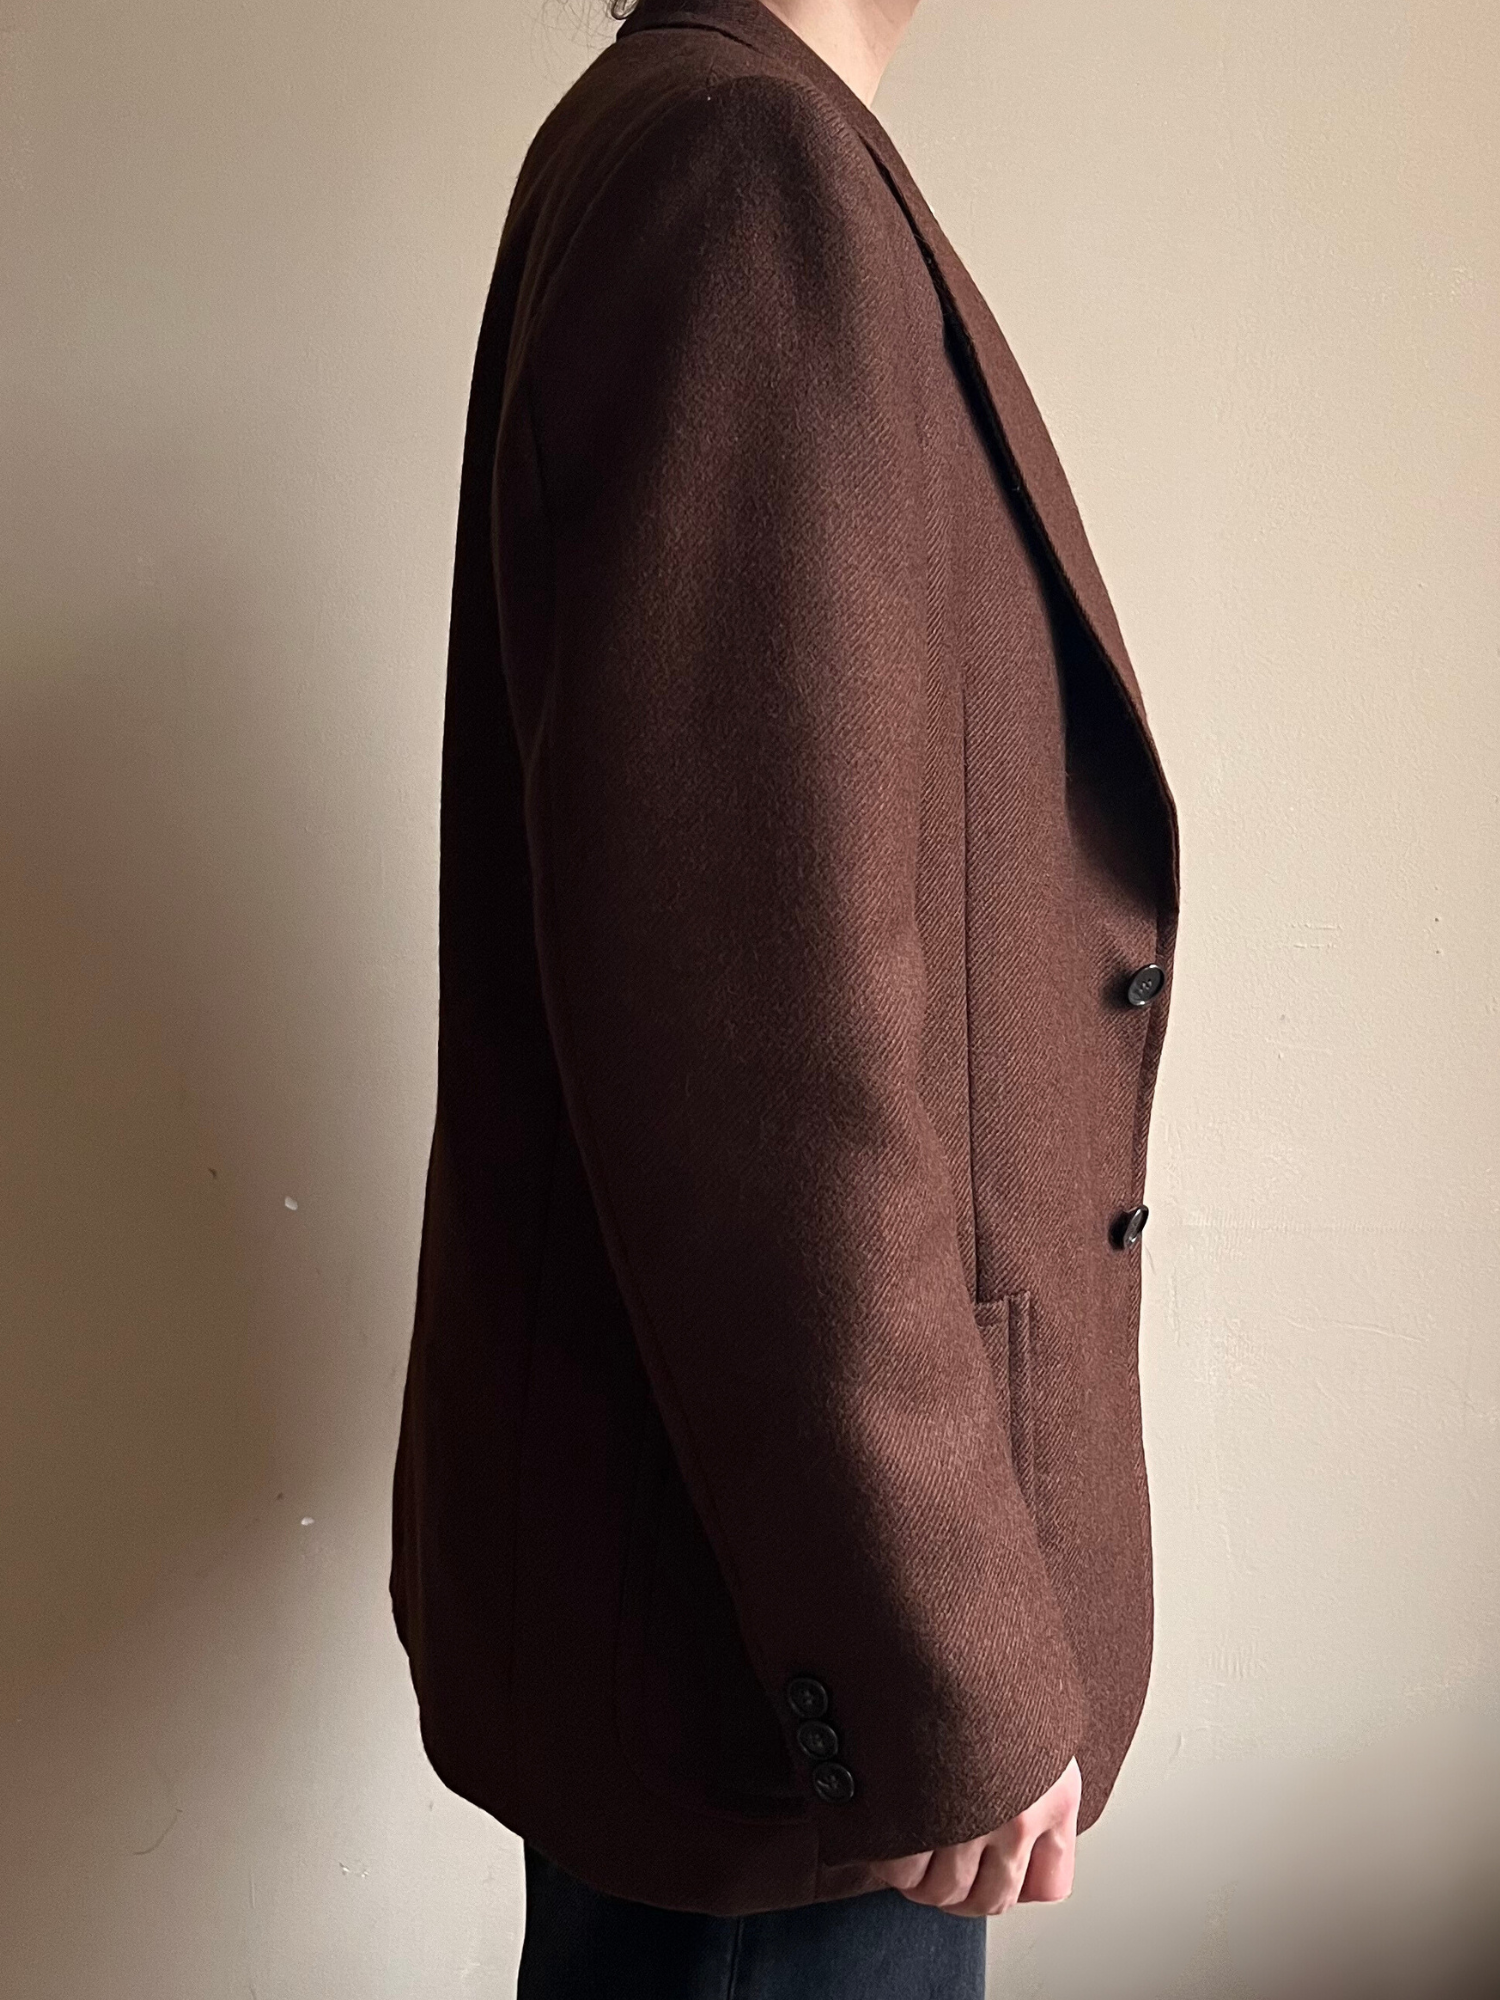 Brown Wool Blazer - L/XL | Vintage